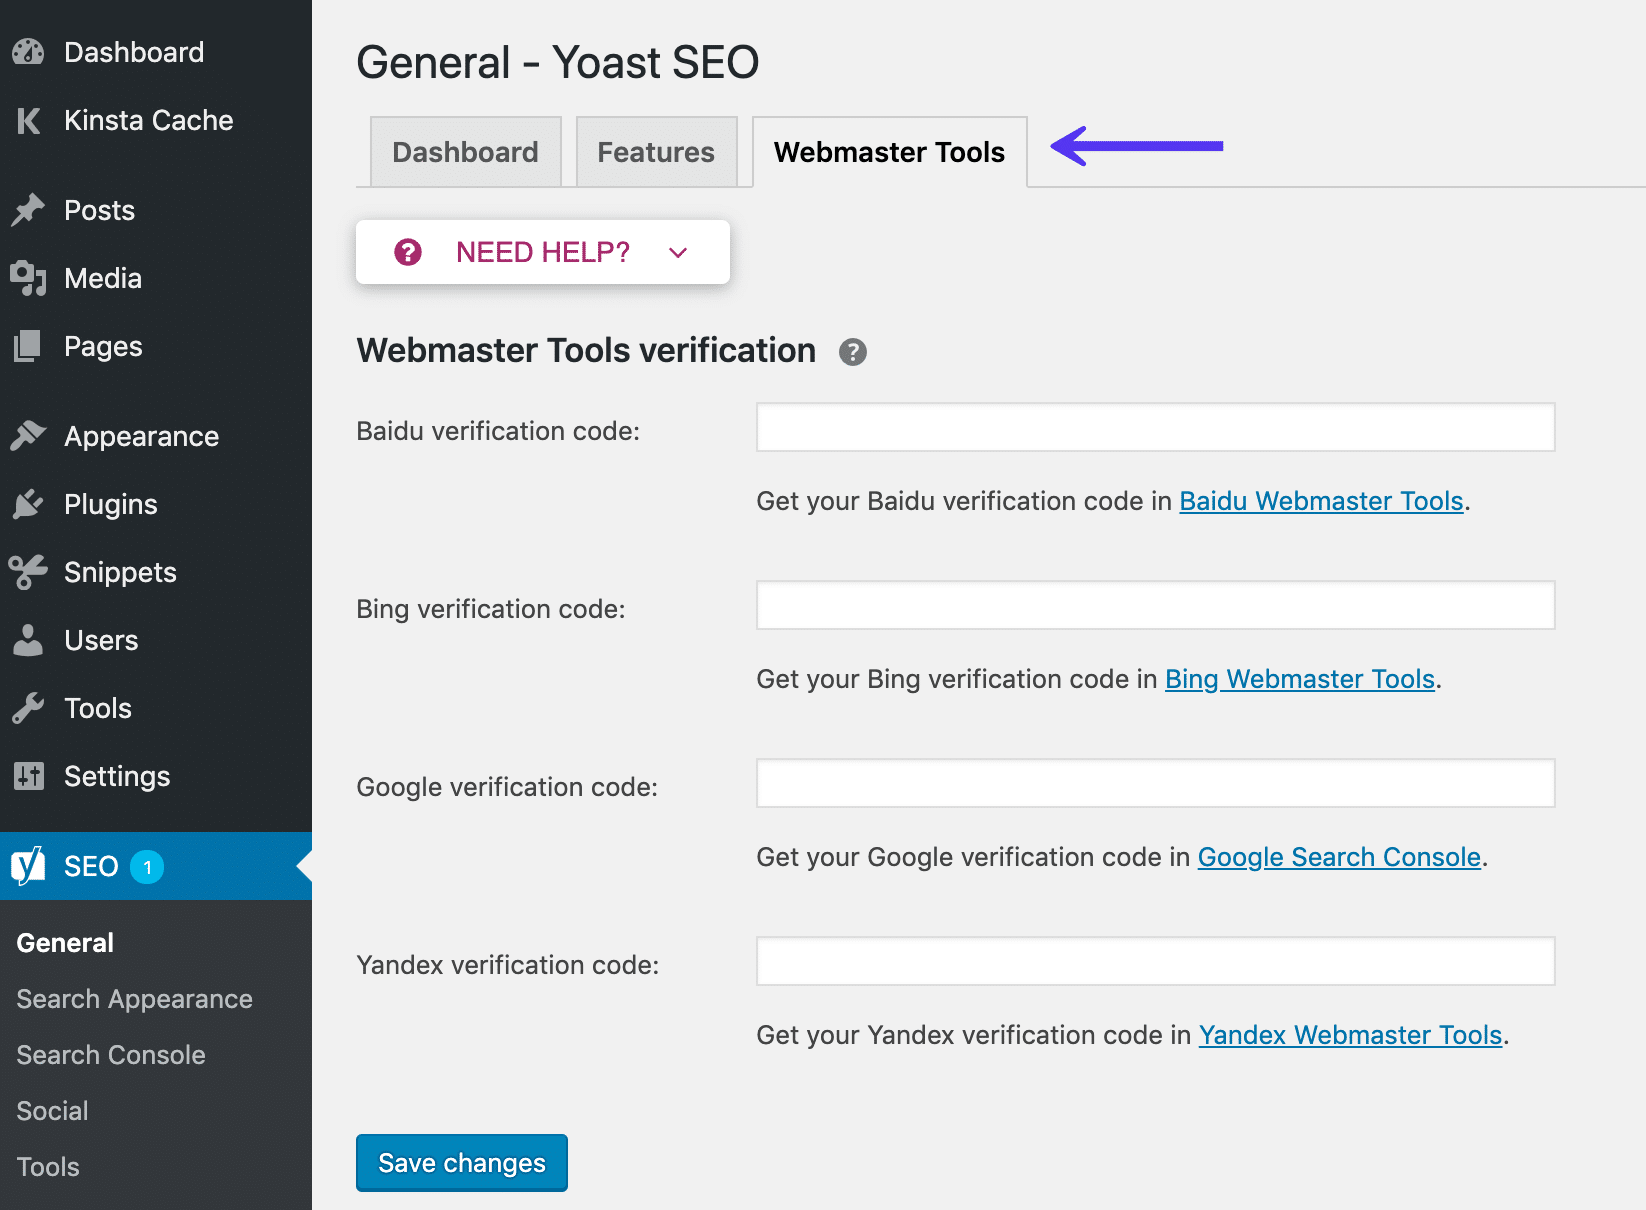 How to Use Yoast SEO on WordPress [Complete Tutorial]